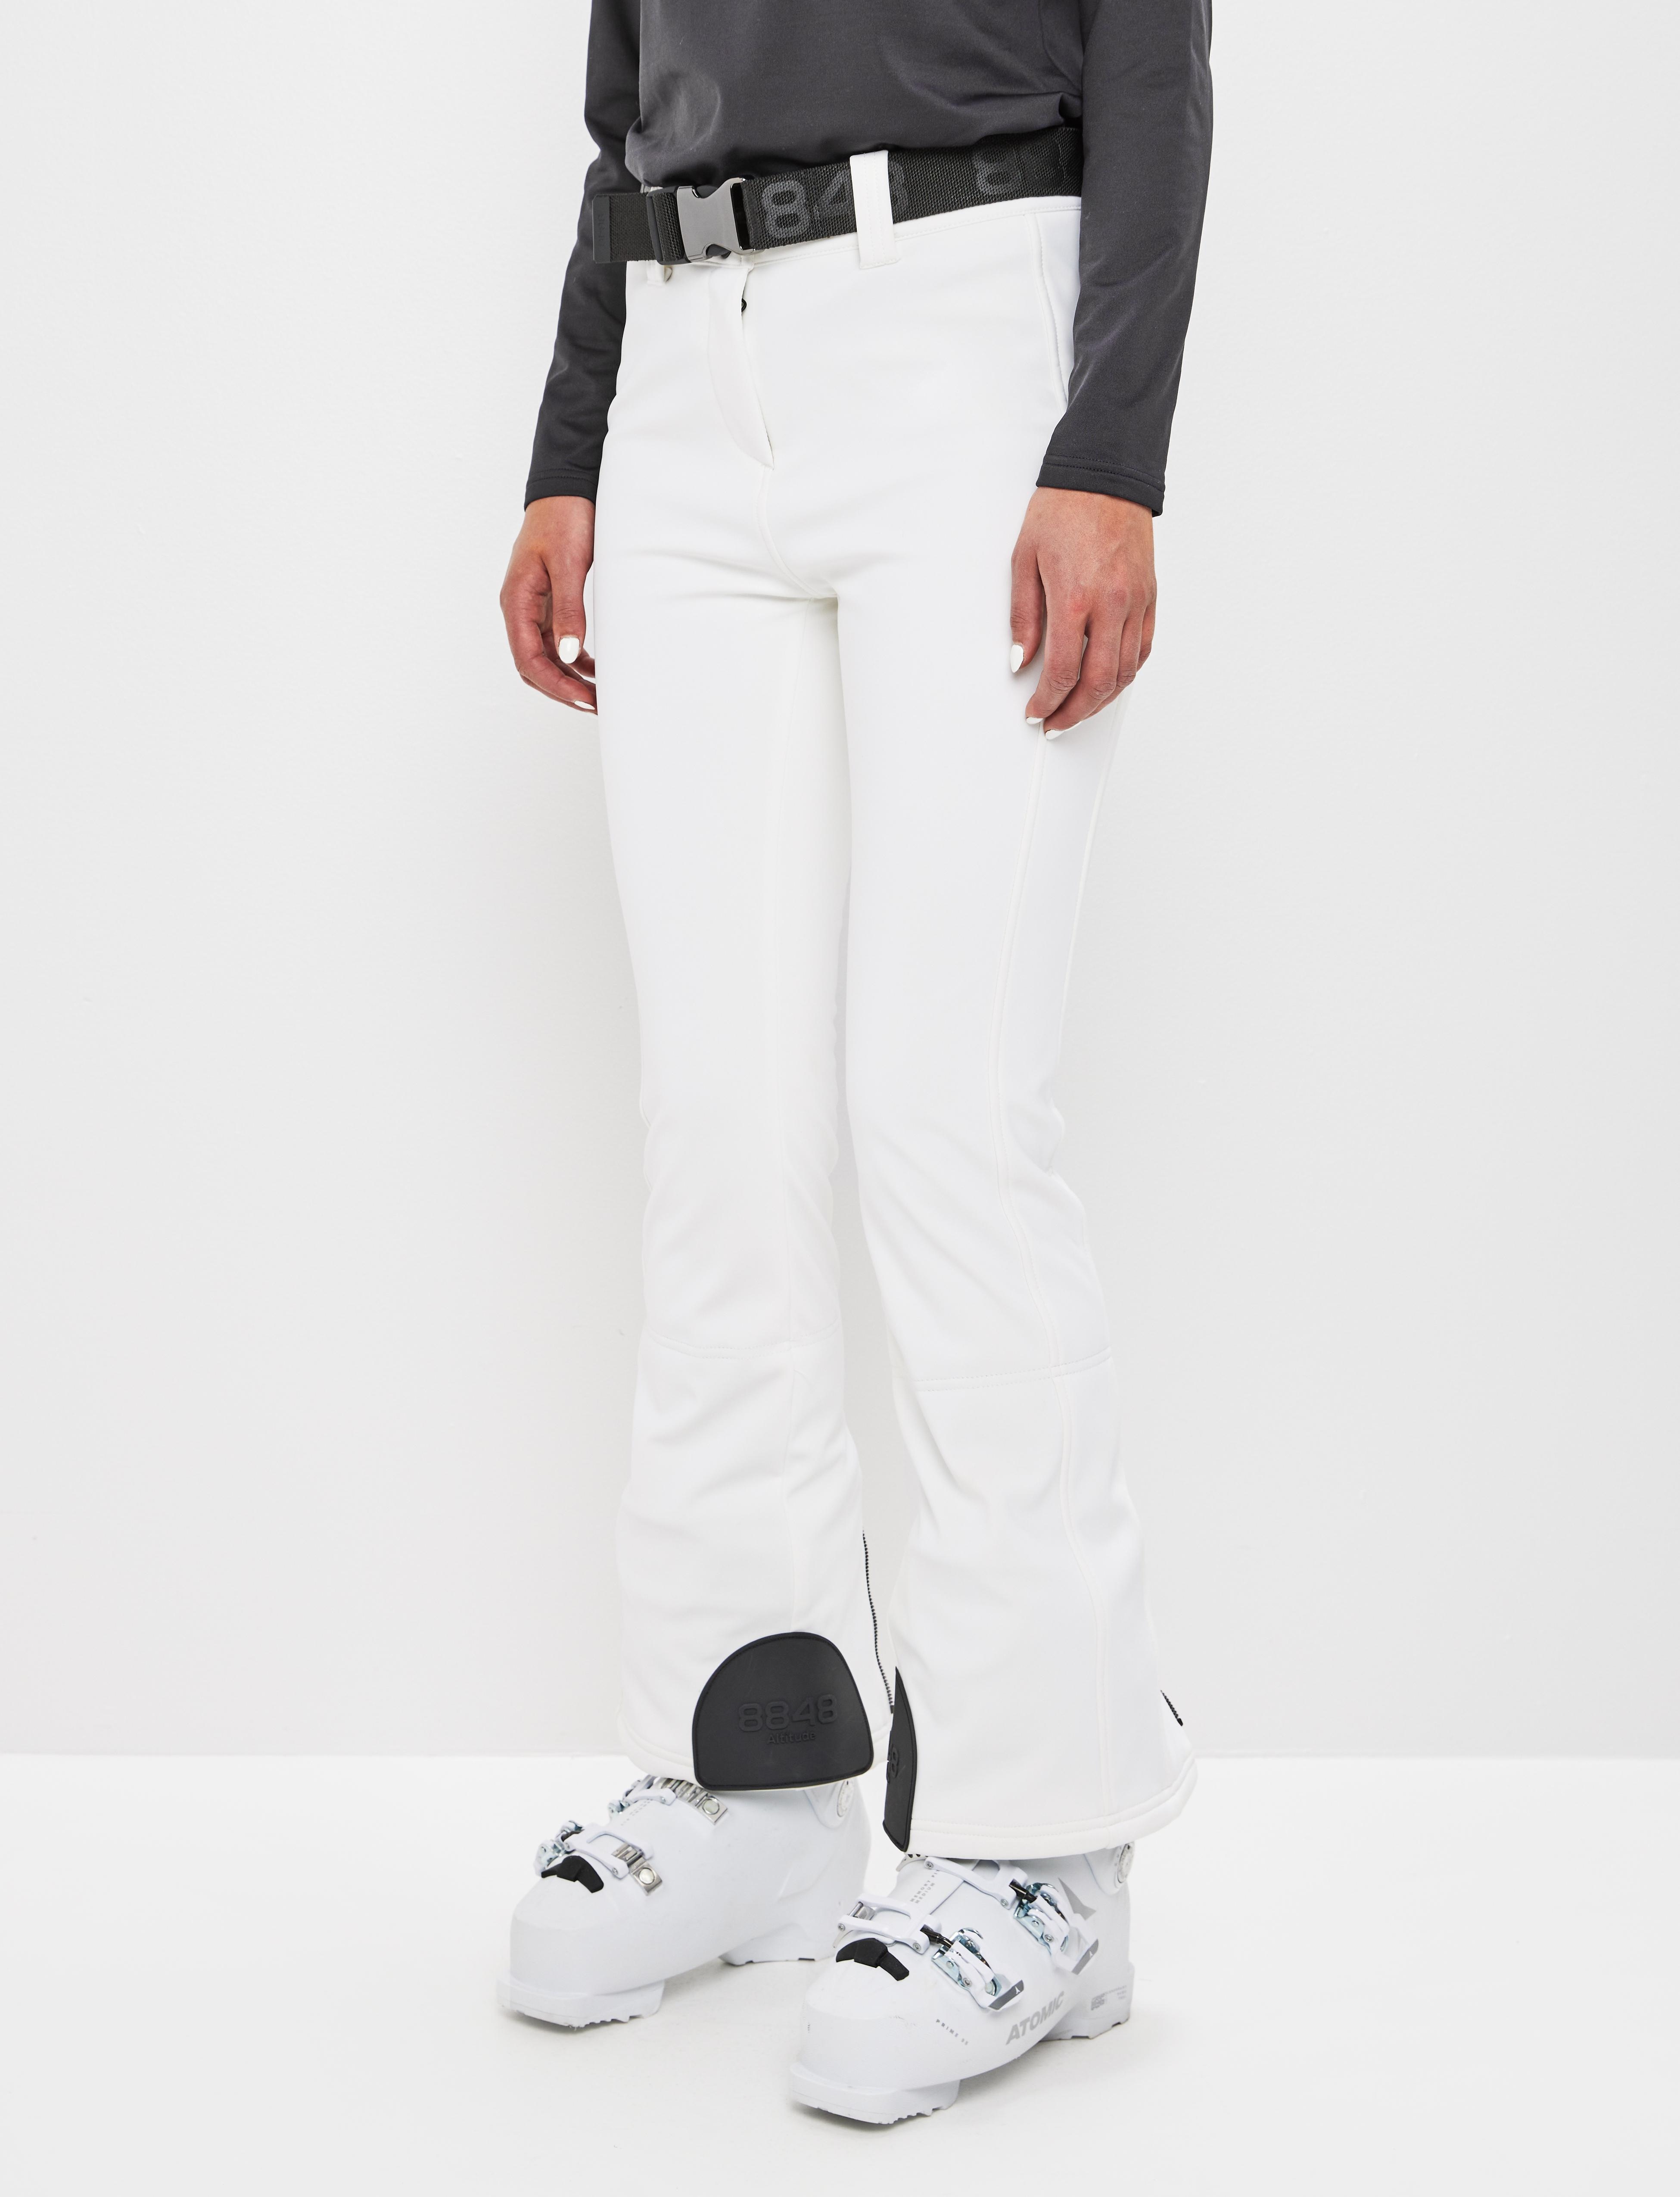 Tumblr W Pant Blanc - White ski pant women slim fit